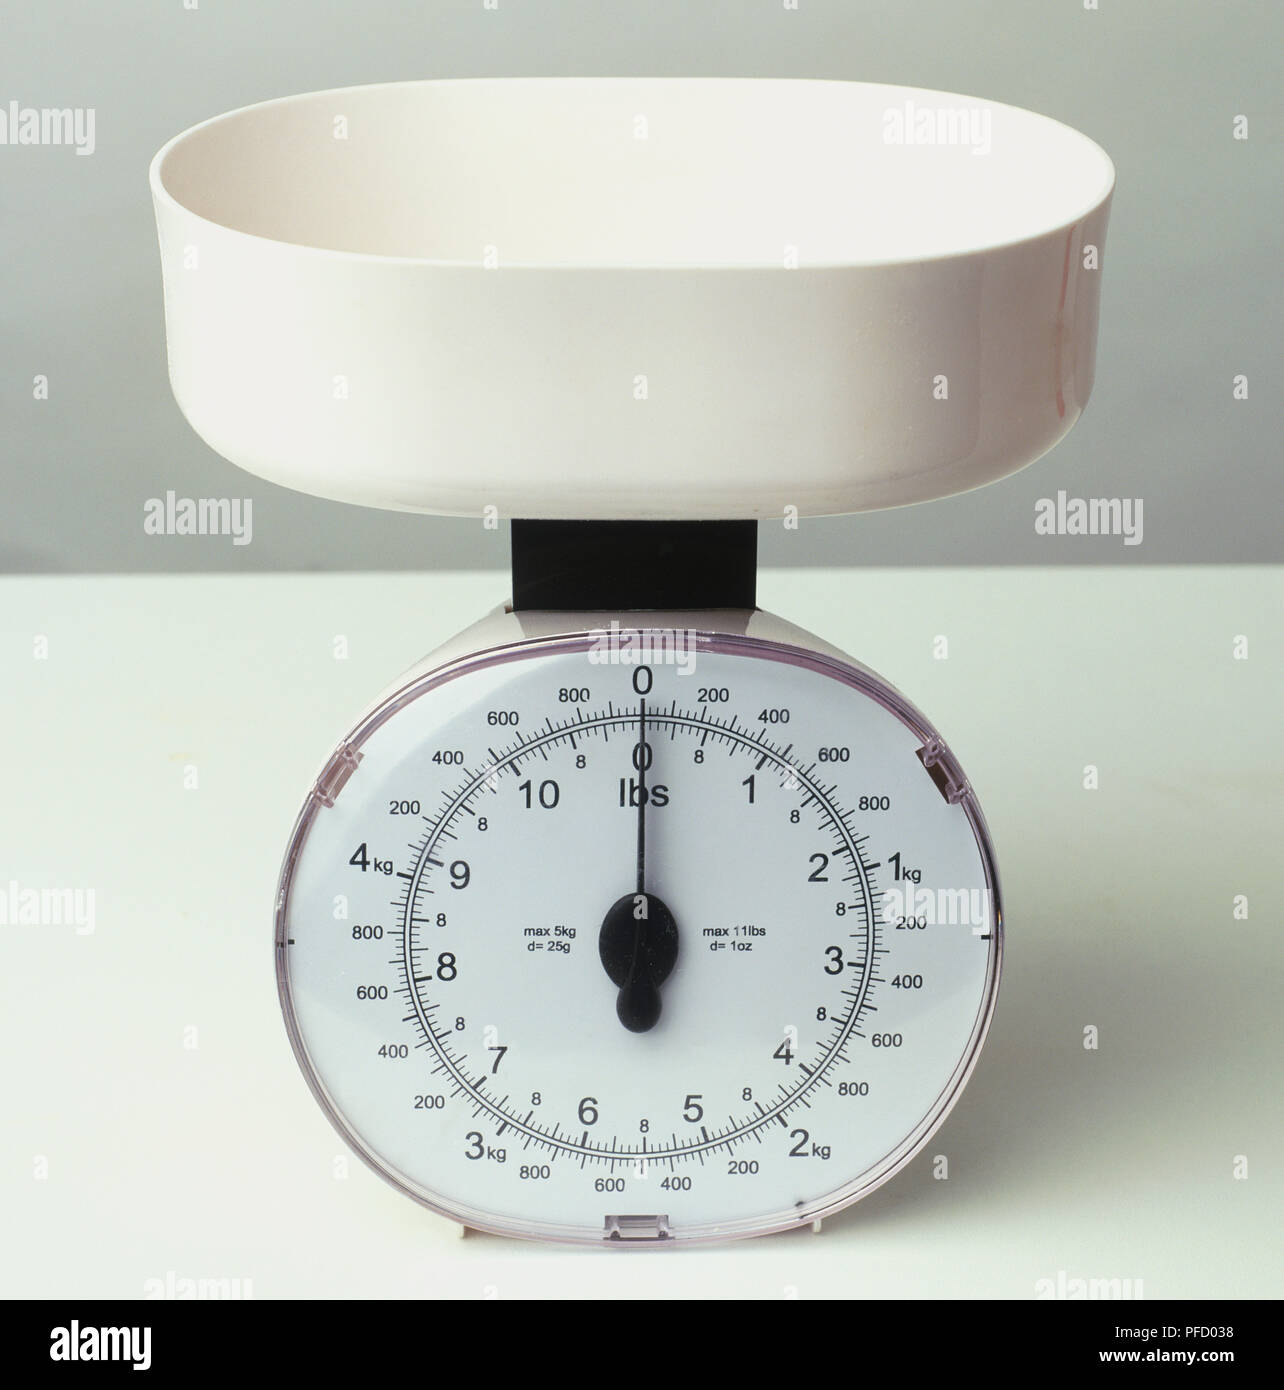 Kitchen scales with white bowl Stock Photo - Alamy